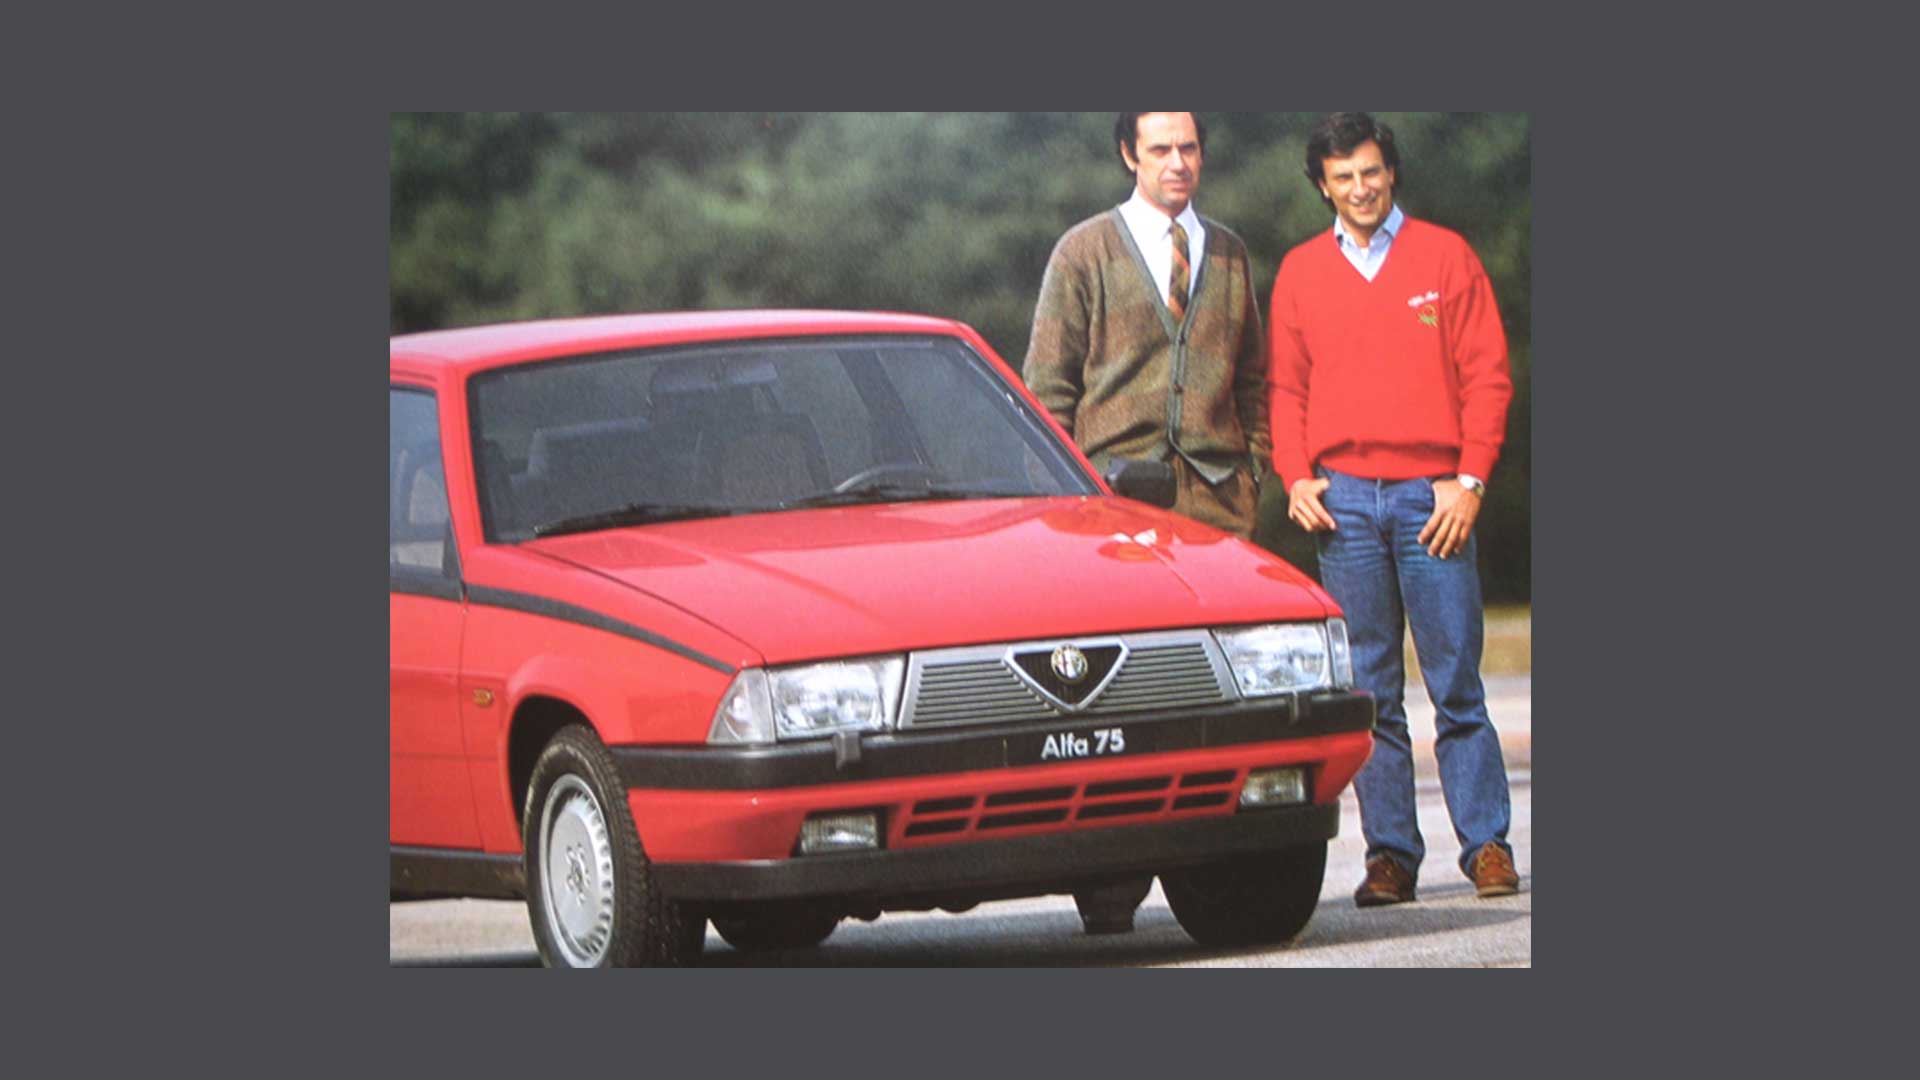 Historic photo of a red Alfa Romeo